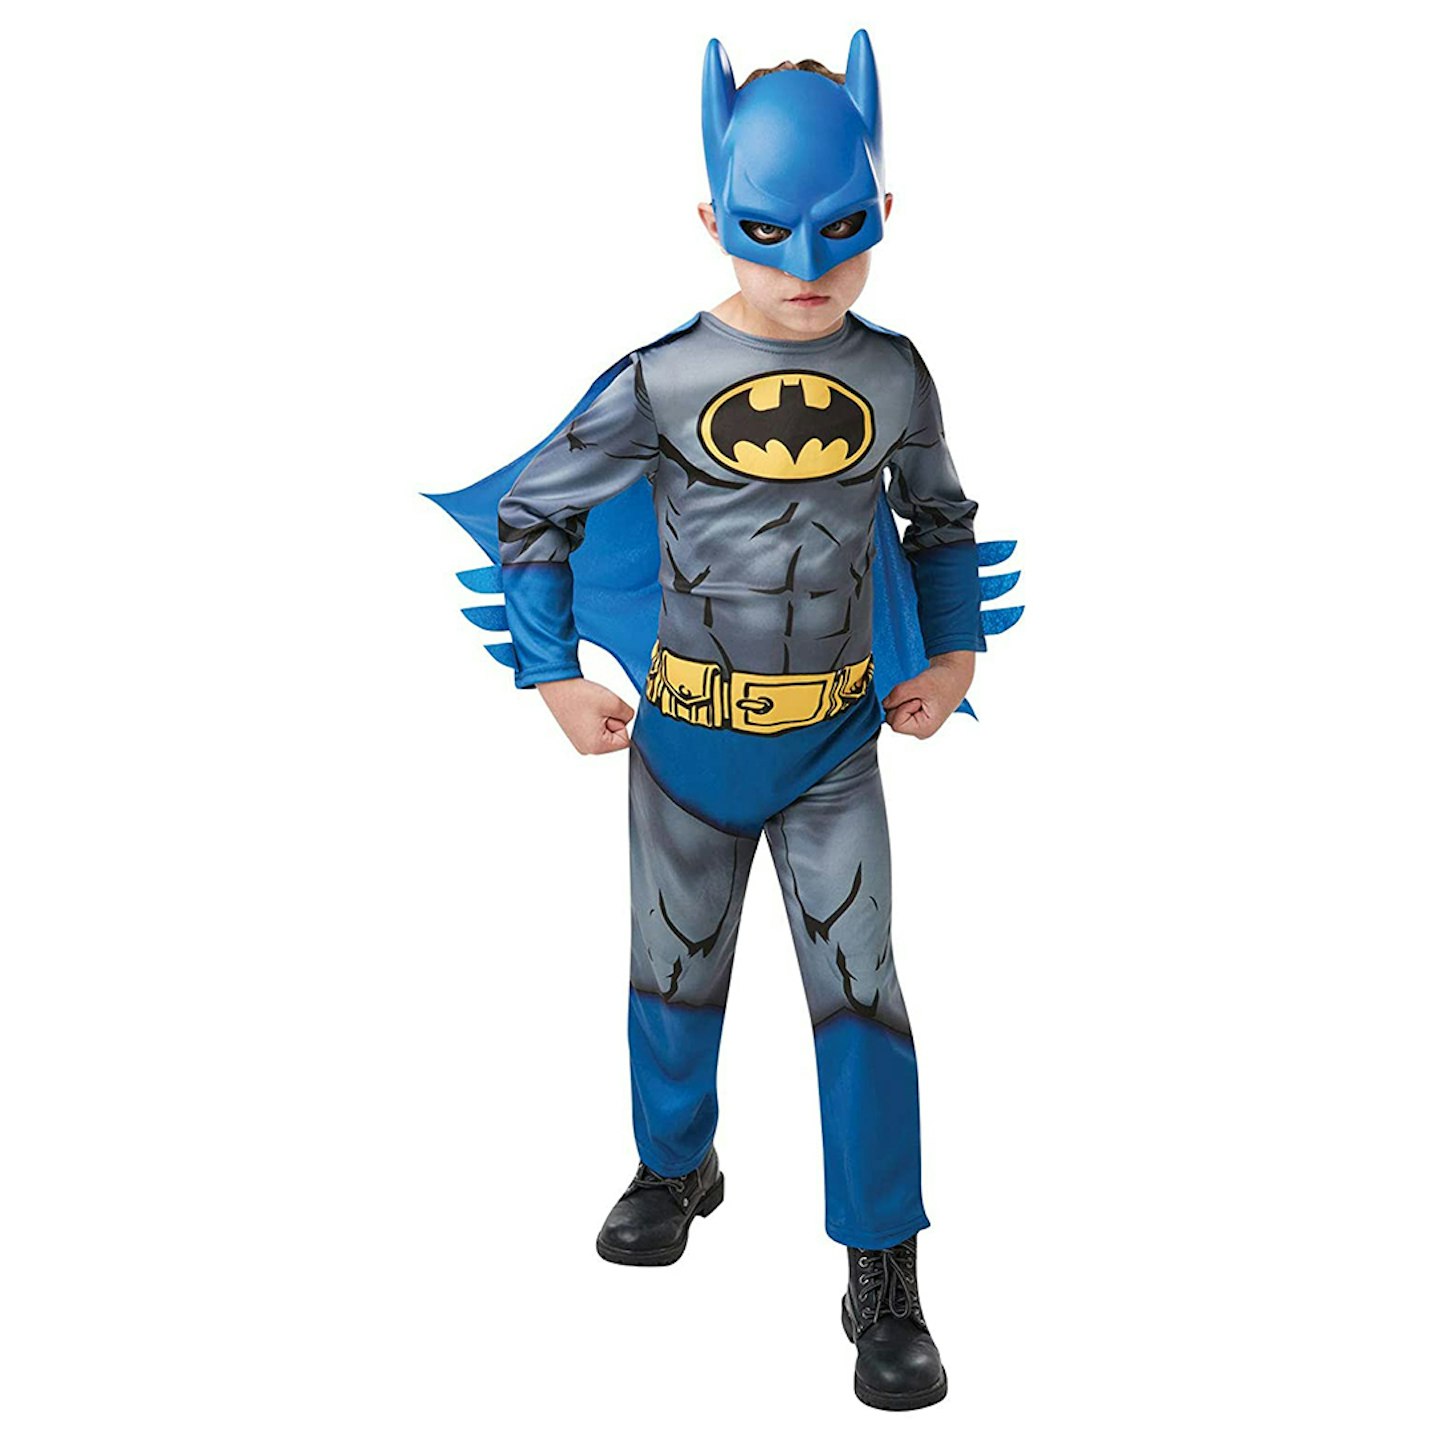 Official DC Comics Batman Comic Book Child's Classic Costume